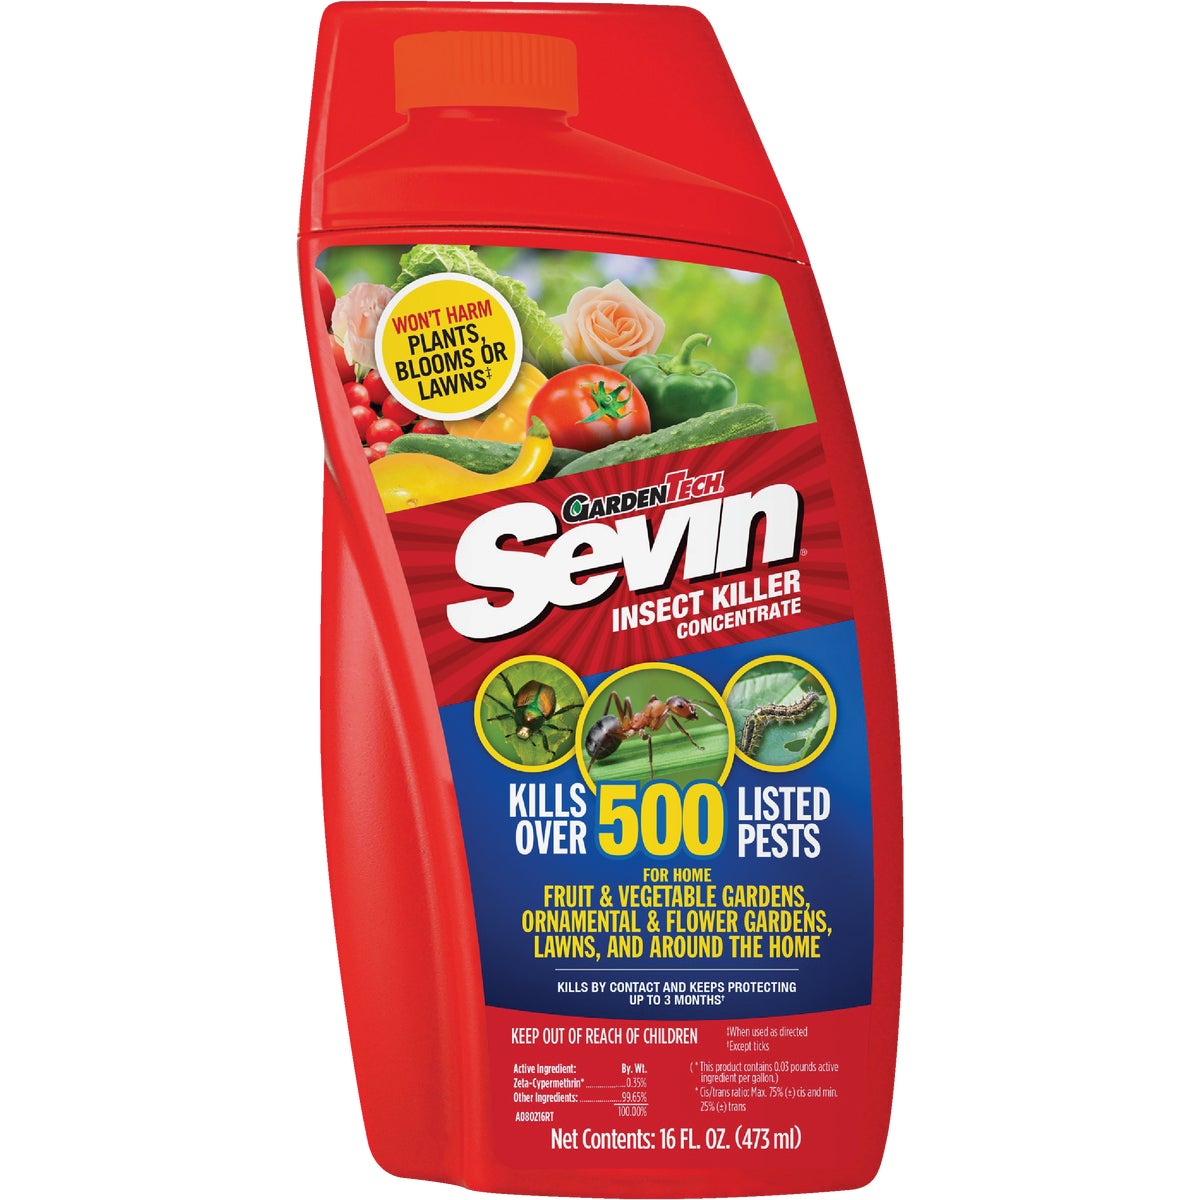 Item 758228, Sevin kills over 500 listed pests on vegetables, fruits, ornamentals, and 